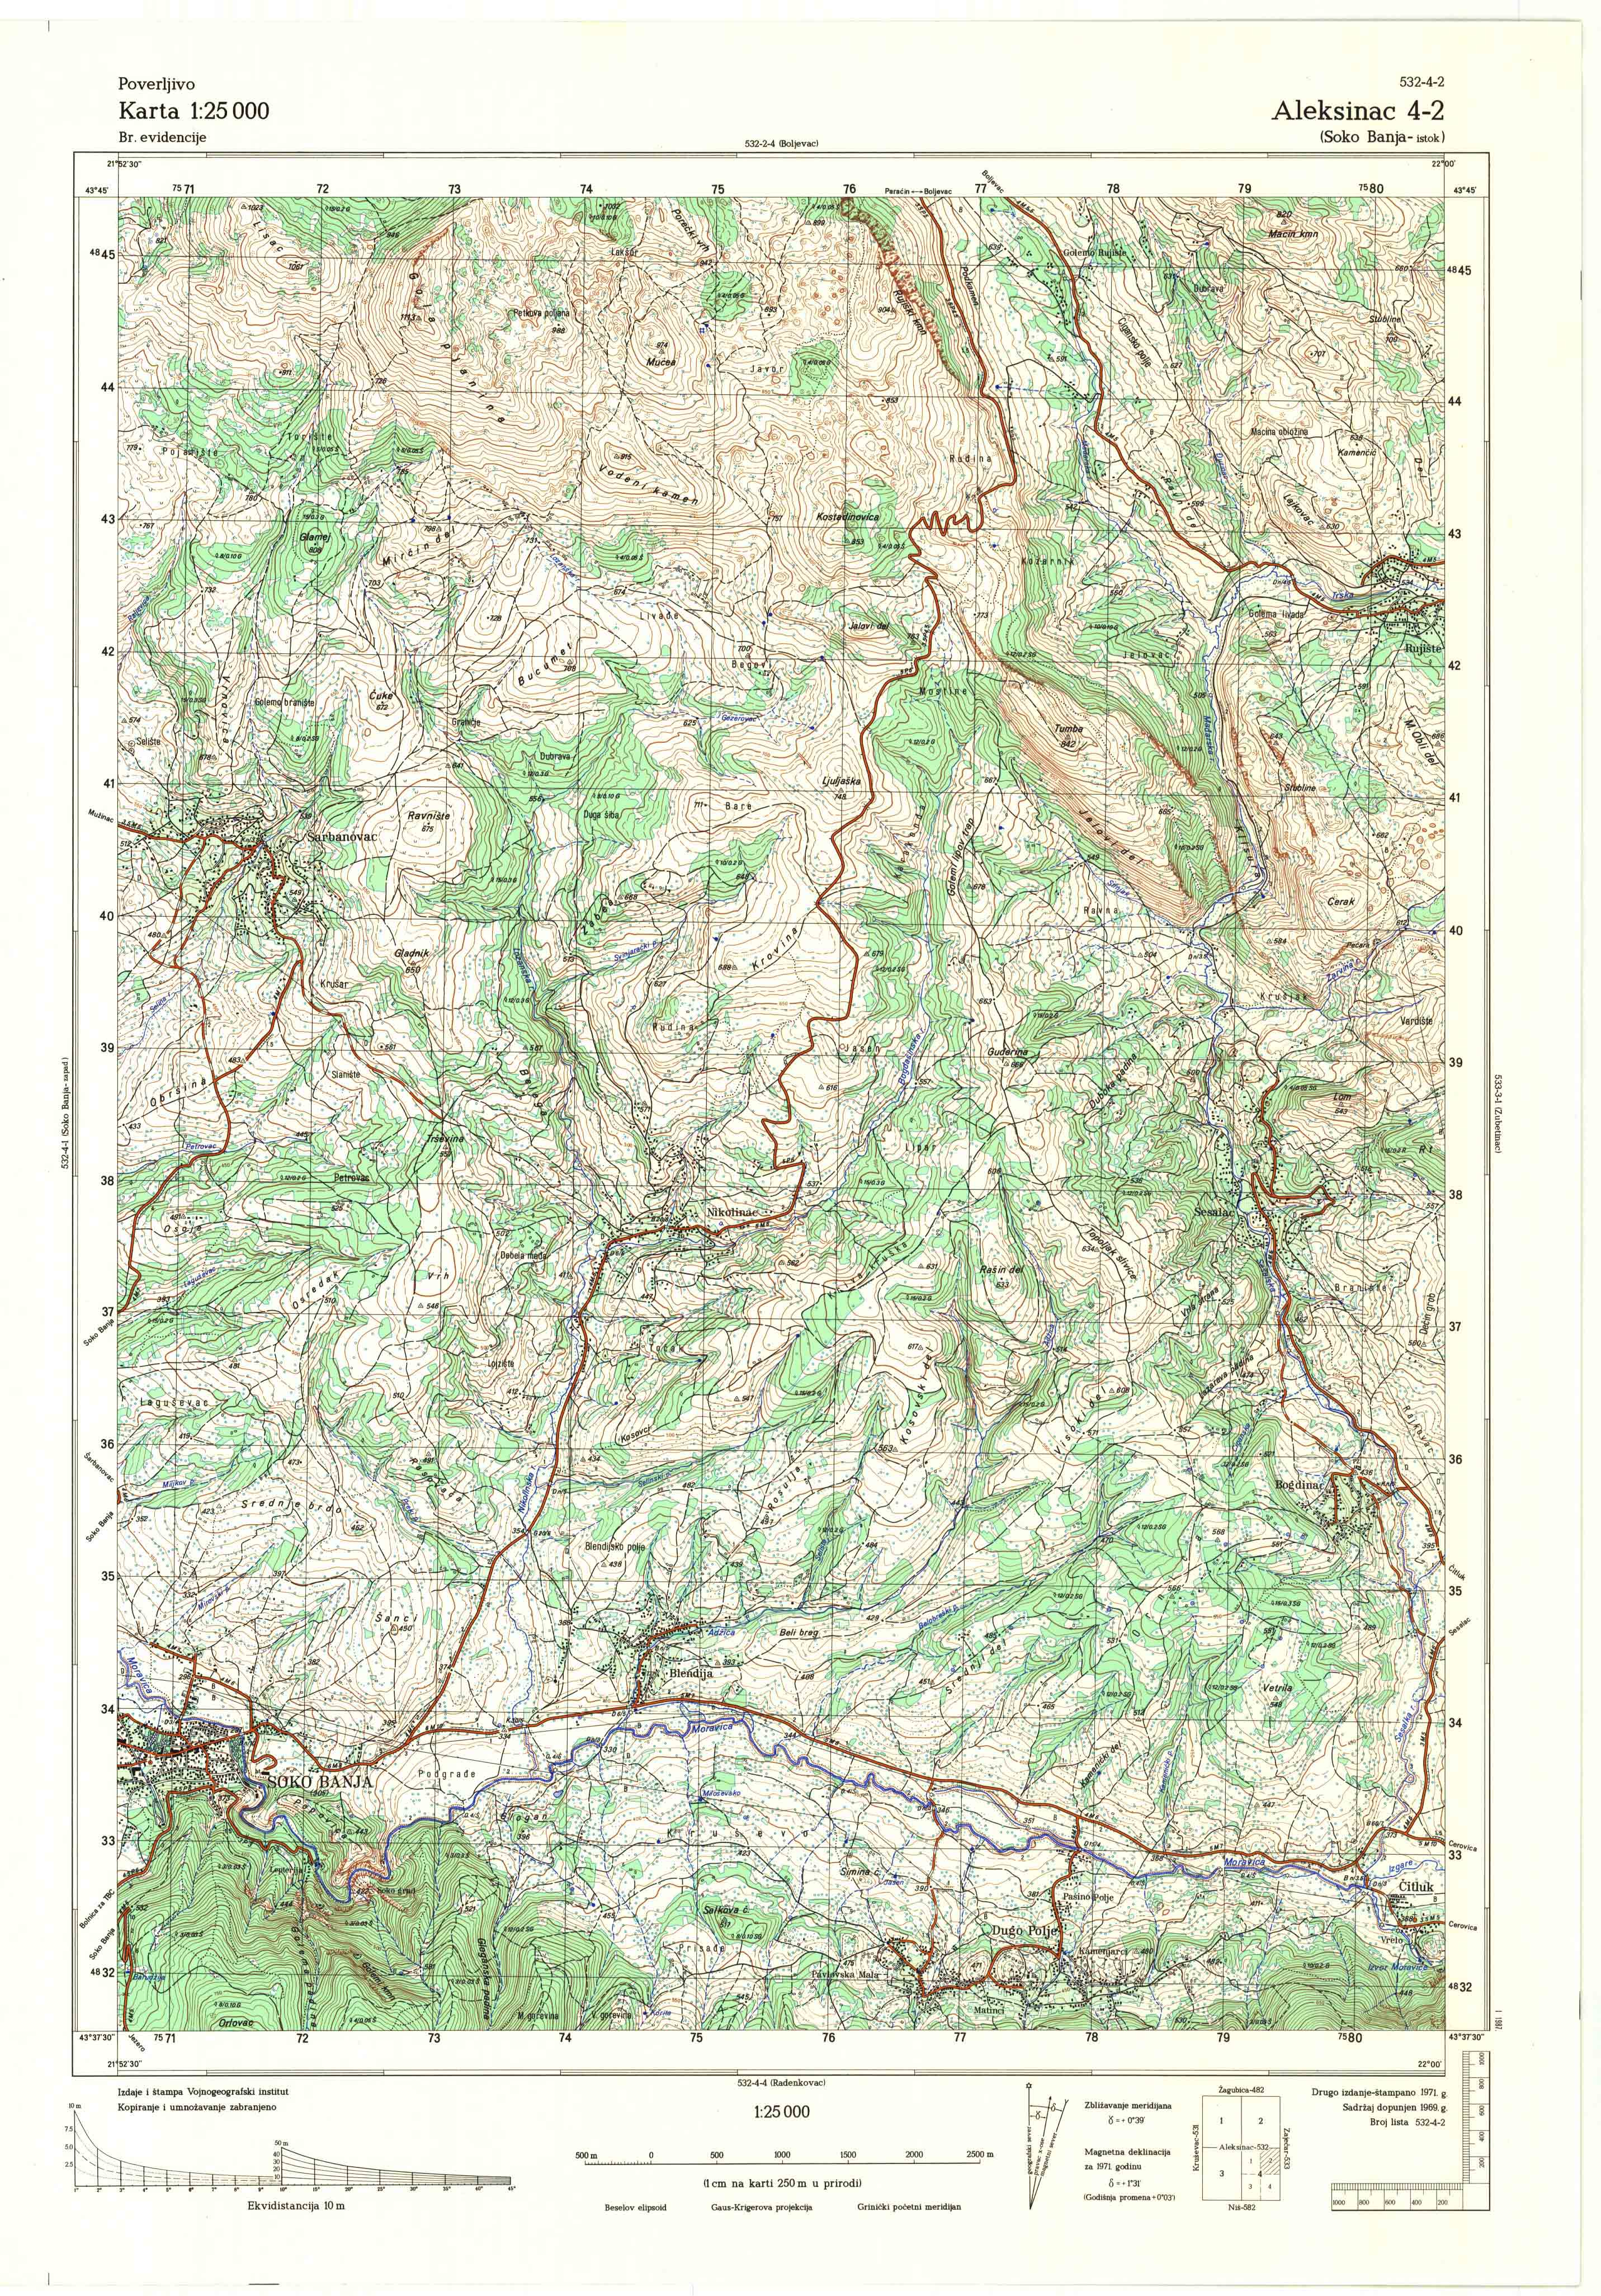  topografska karta srbije 25000 JNA  Aleksinac